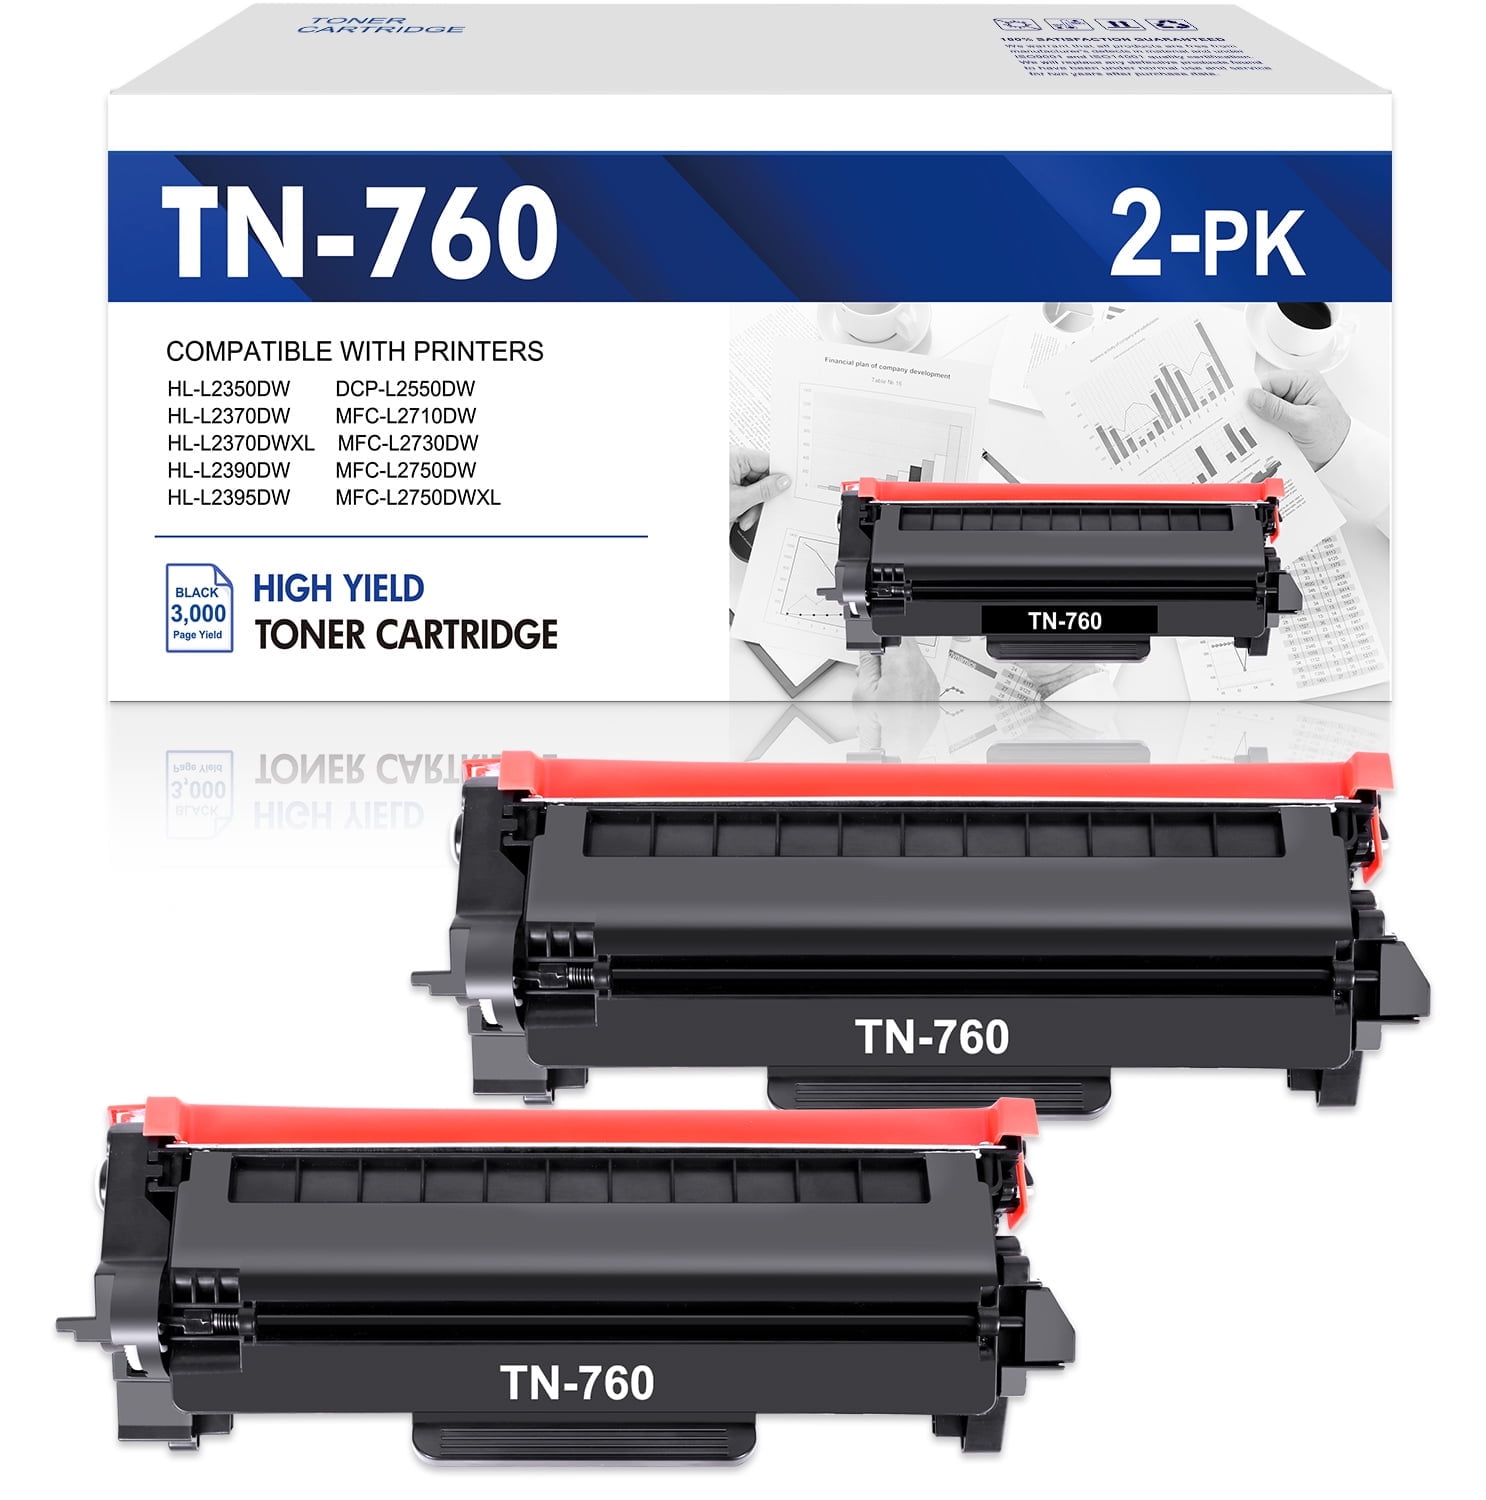 Brother MFC-L2710DW Printer Toner Cartridge, Black, Compatible, New